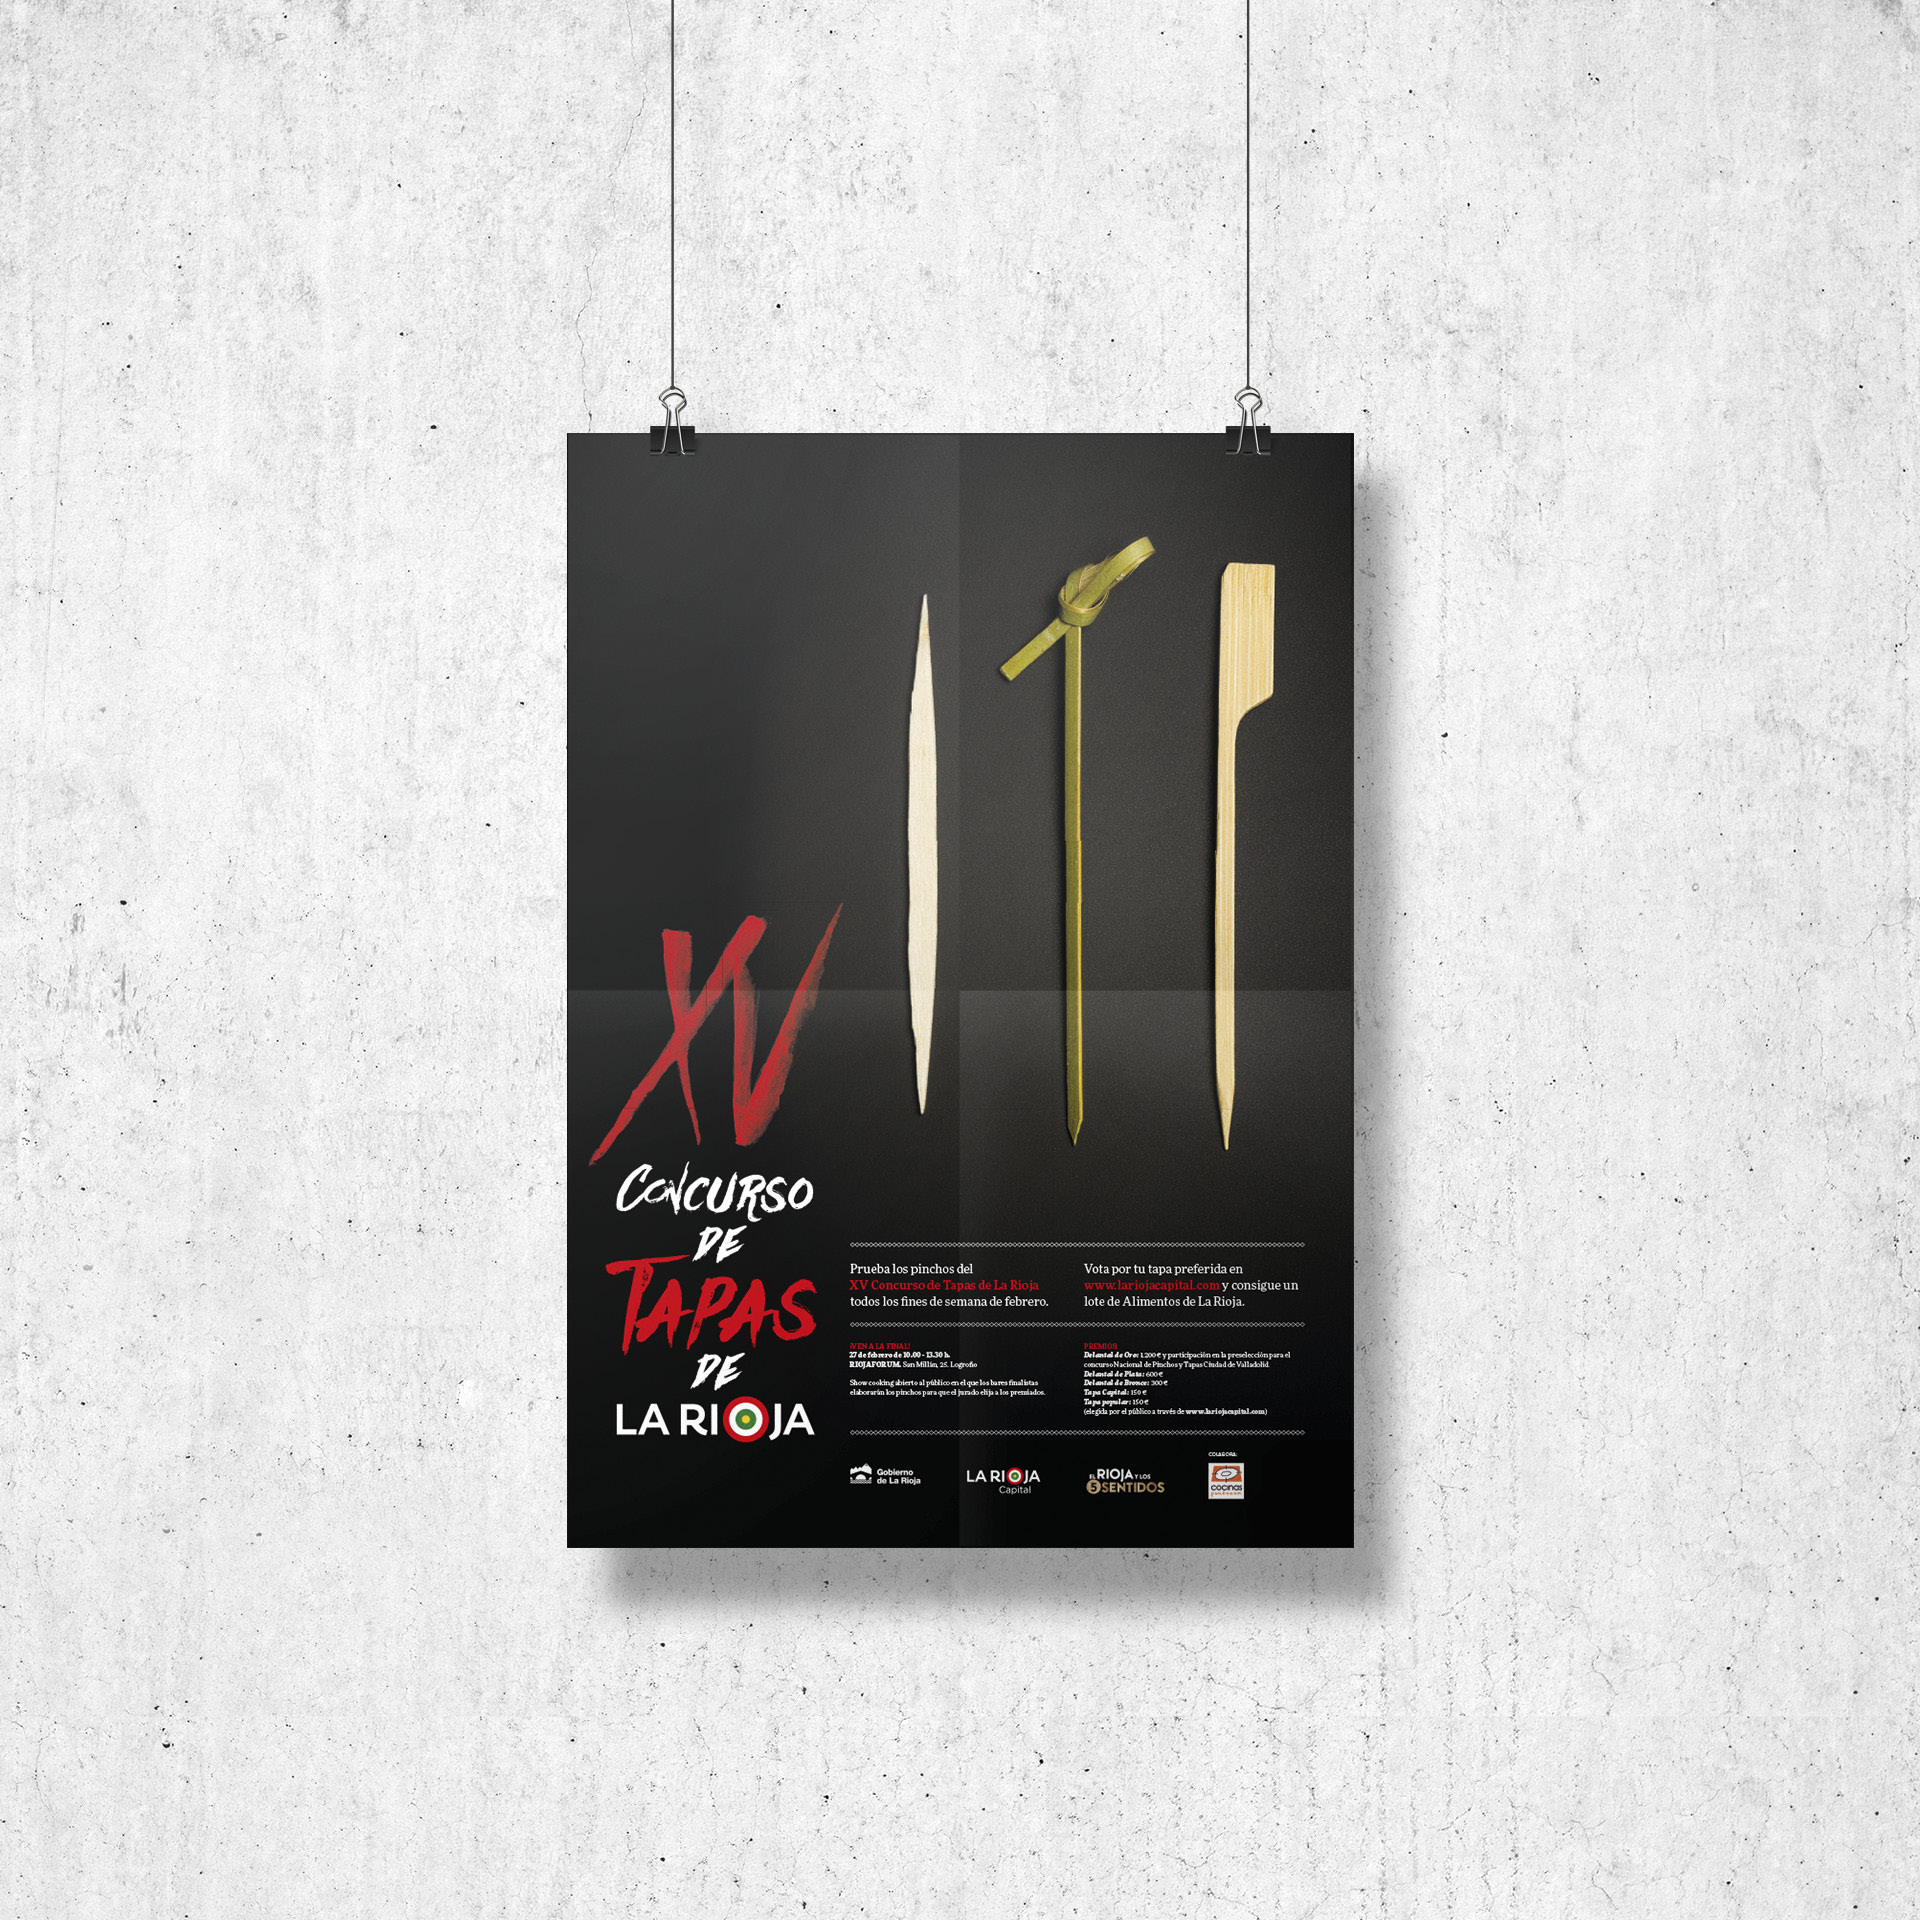 XV Concurso de Tapas de La Rioja by Óscar Ortega Quesada - Creative Work